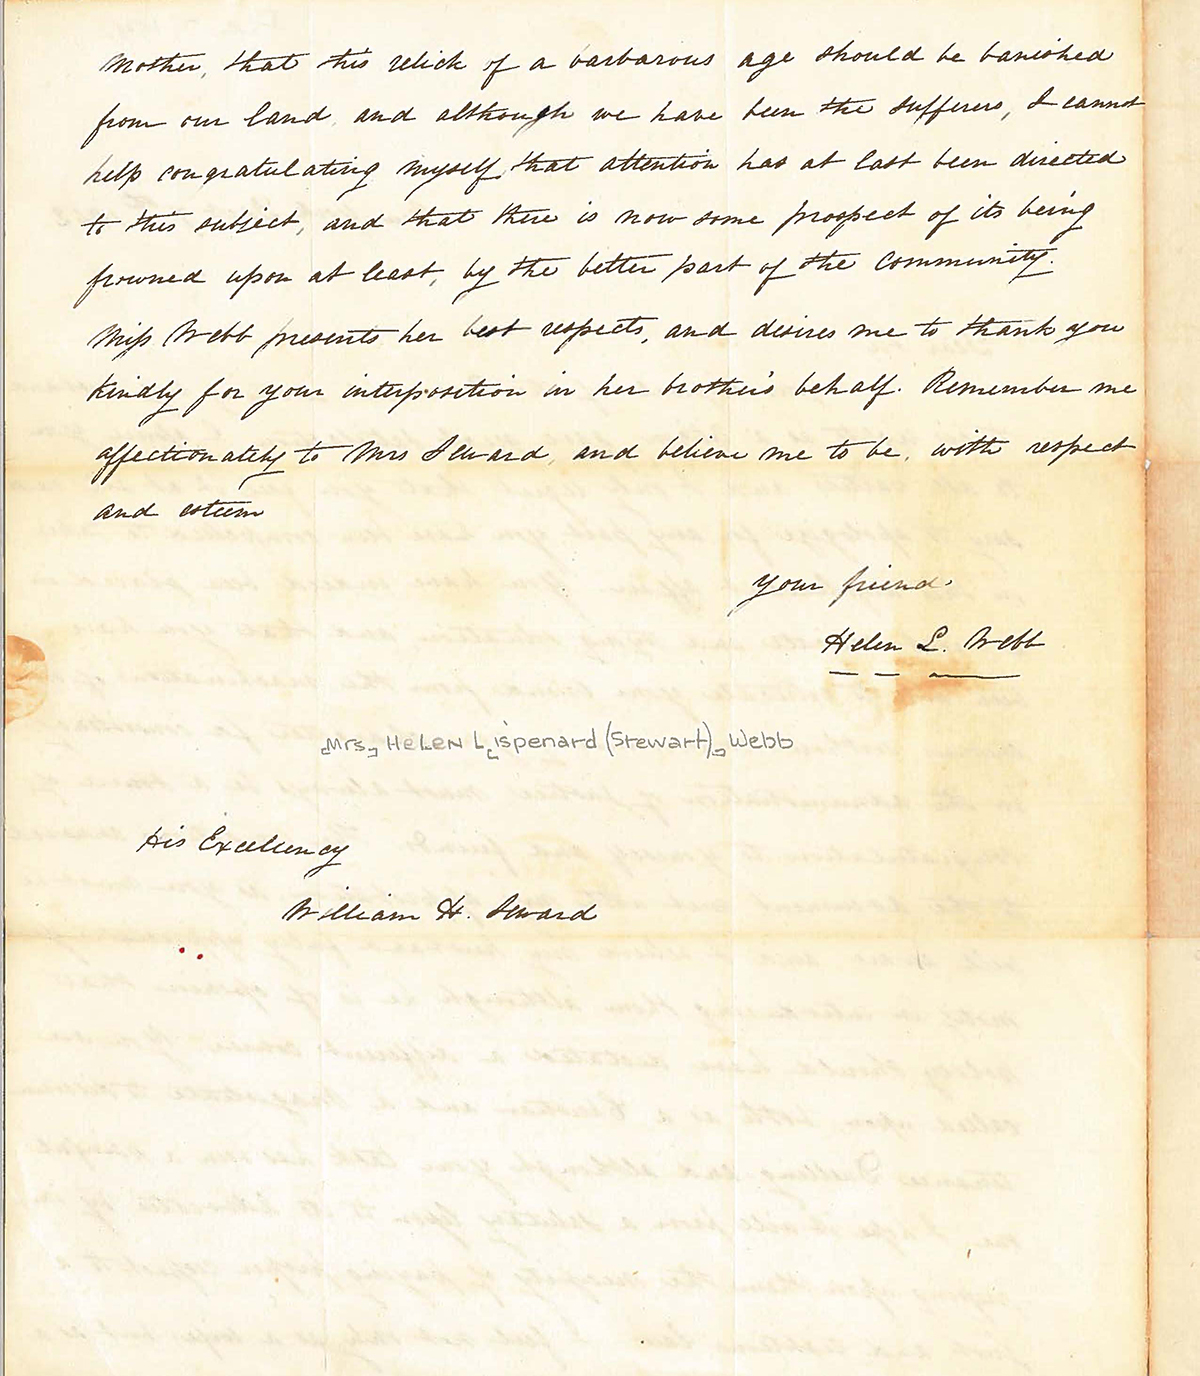 Letter from Helen Lispenard (Stewart) Webb to William Henry Seward, page 2, dated December 7, 1842